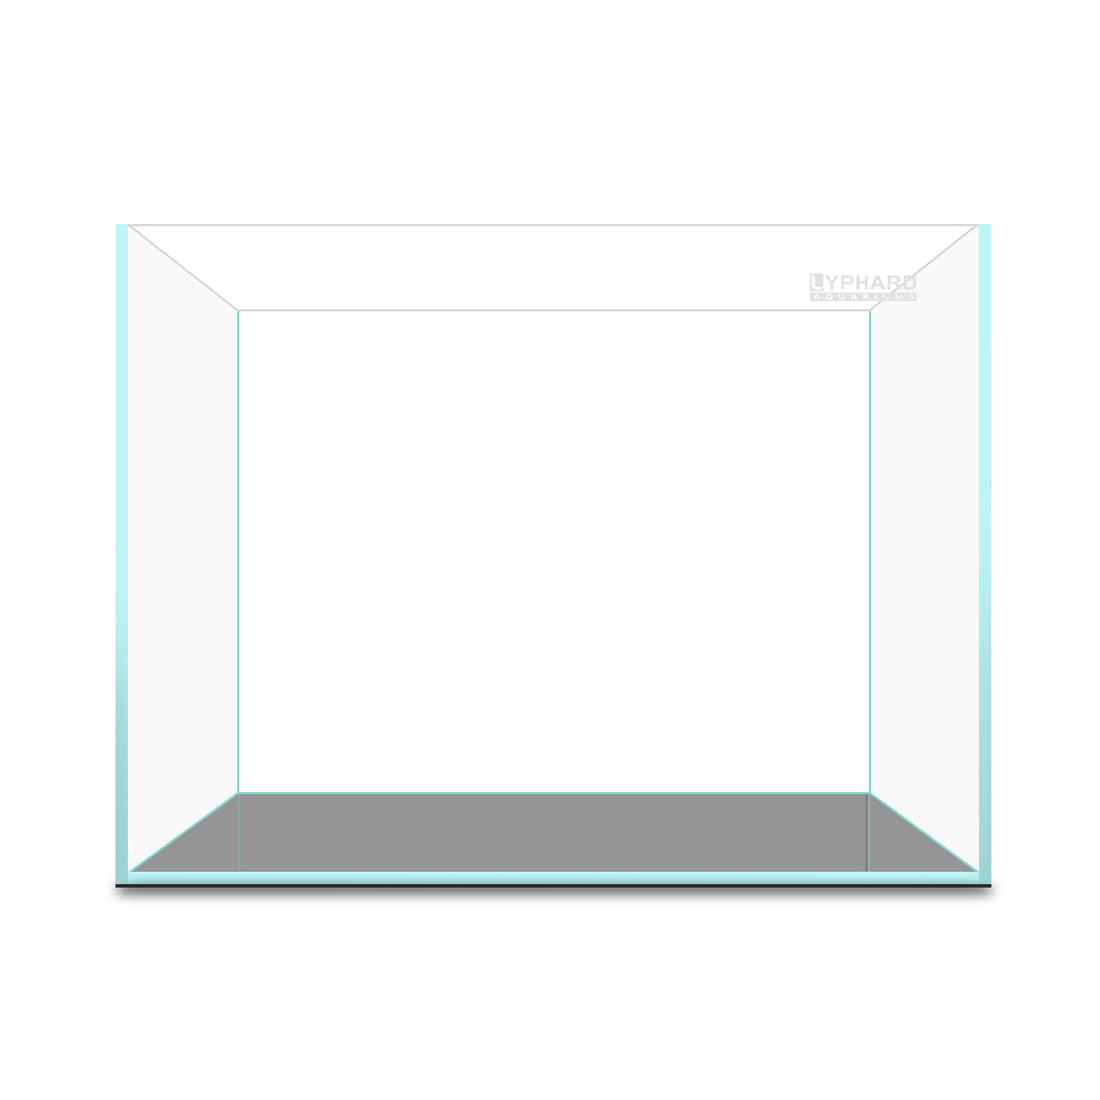 Ultra White Clear Glass Low Iron Aquarium Tank 15 Gal